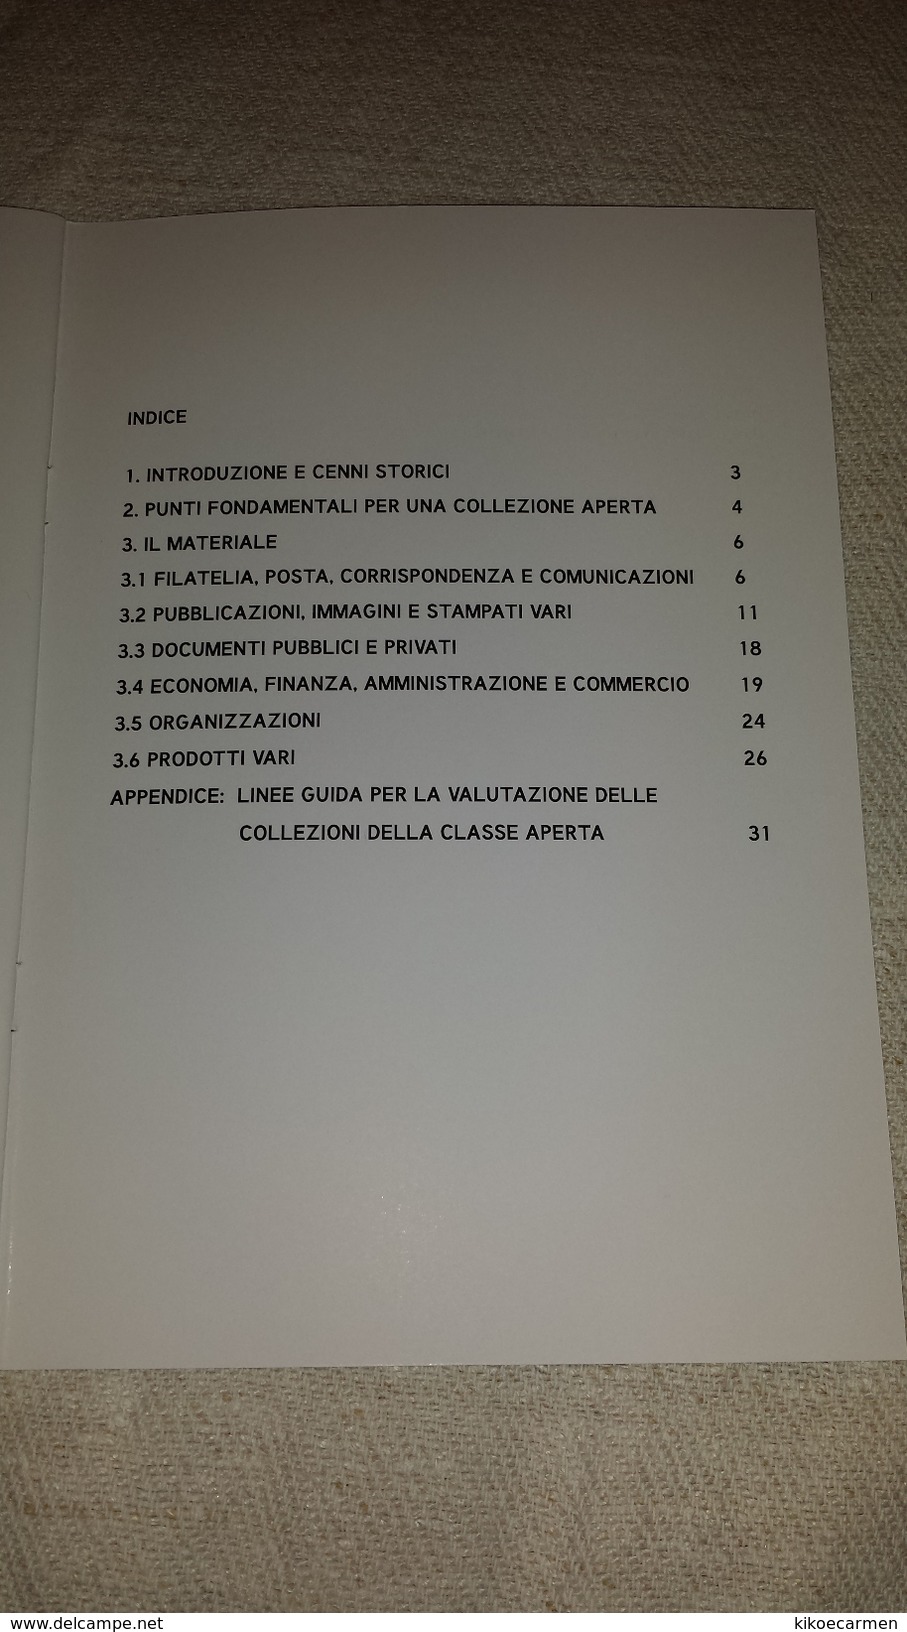 2scans CLASSE APERTA Morolli Occhipinti OPEN CLASS Quaderni Del CIFT - B/W Book 36 Pages In 19 Photocopies - Thema's